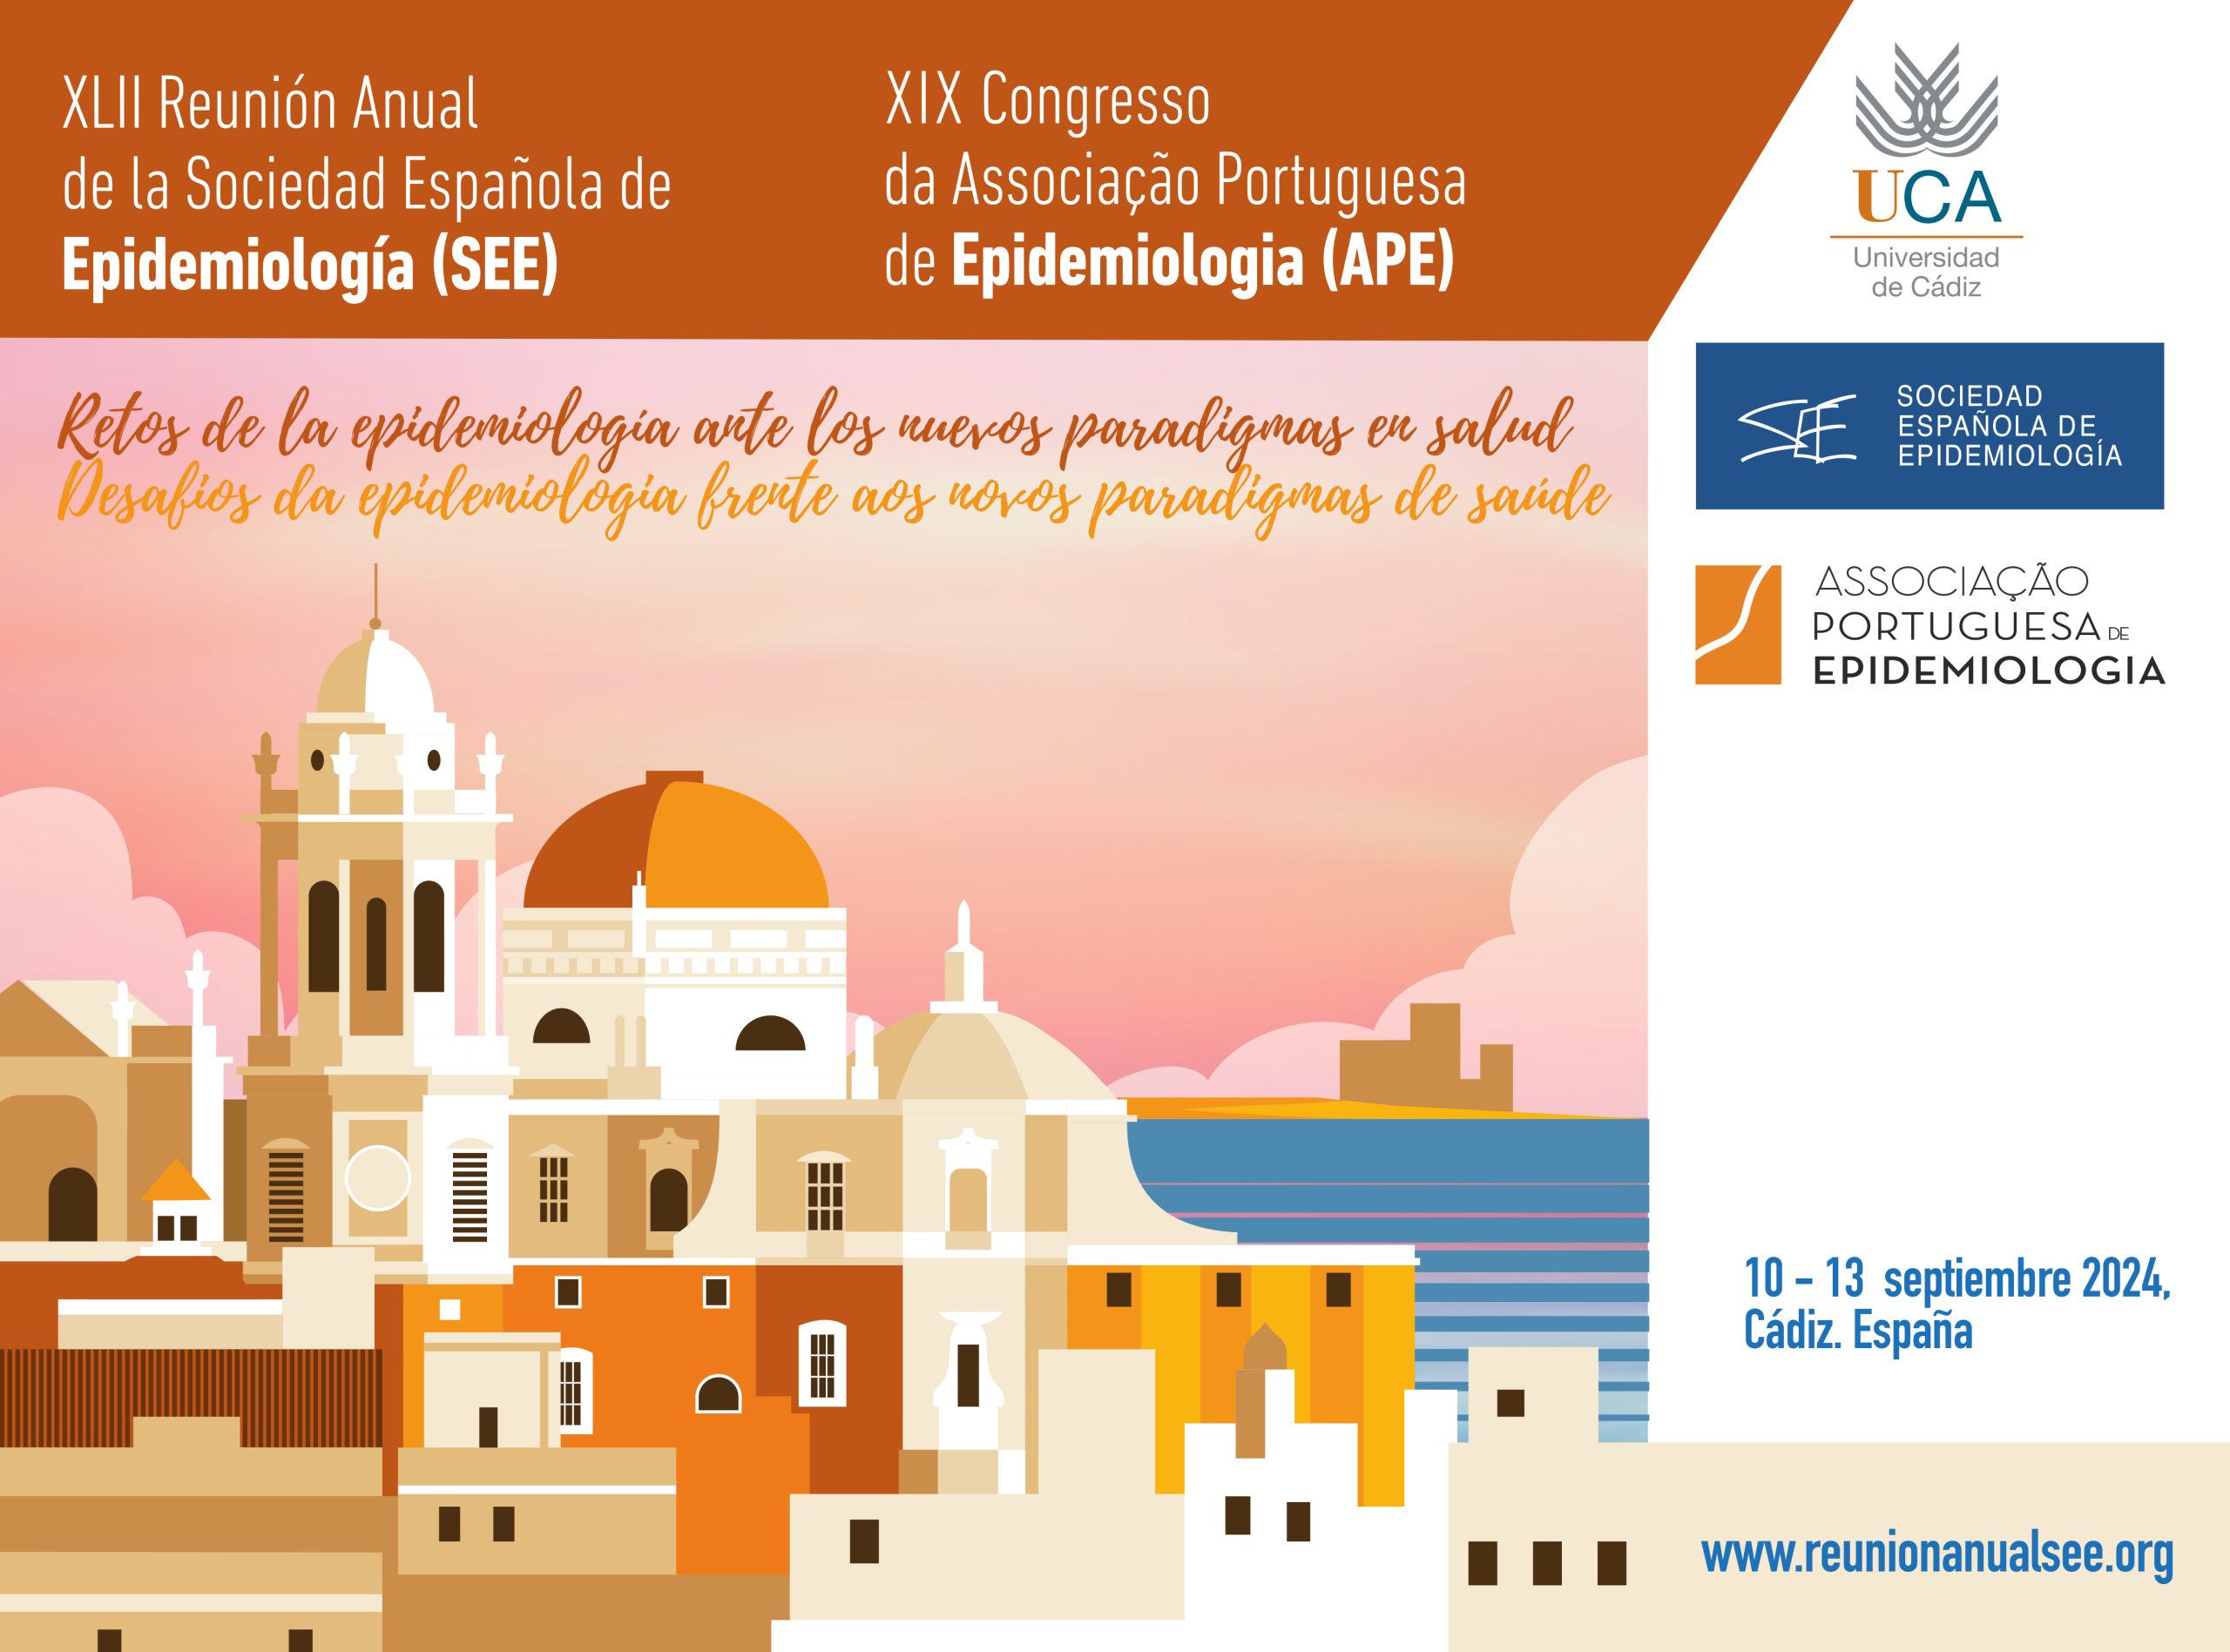 XLII Reunión Científica Sociedad Española de Epidemiología – XIX Congresso Associaçao Portuguesa de Epidemiologia [10-13 Septiembre]